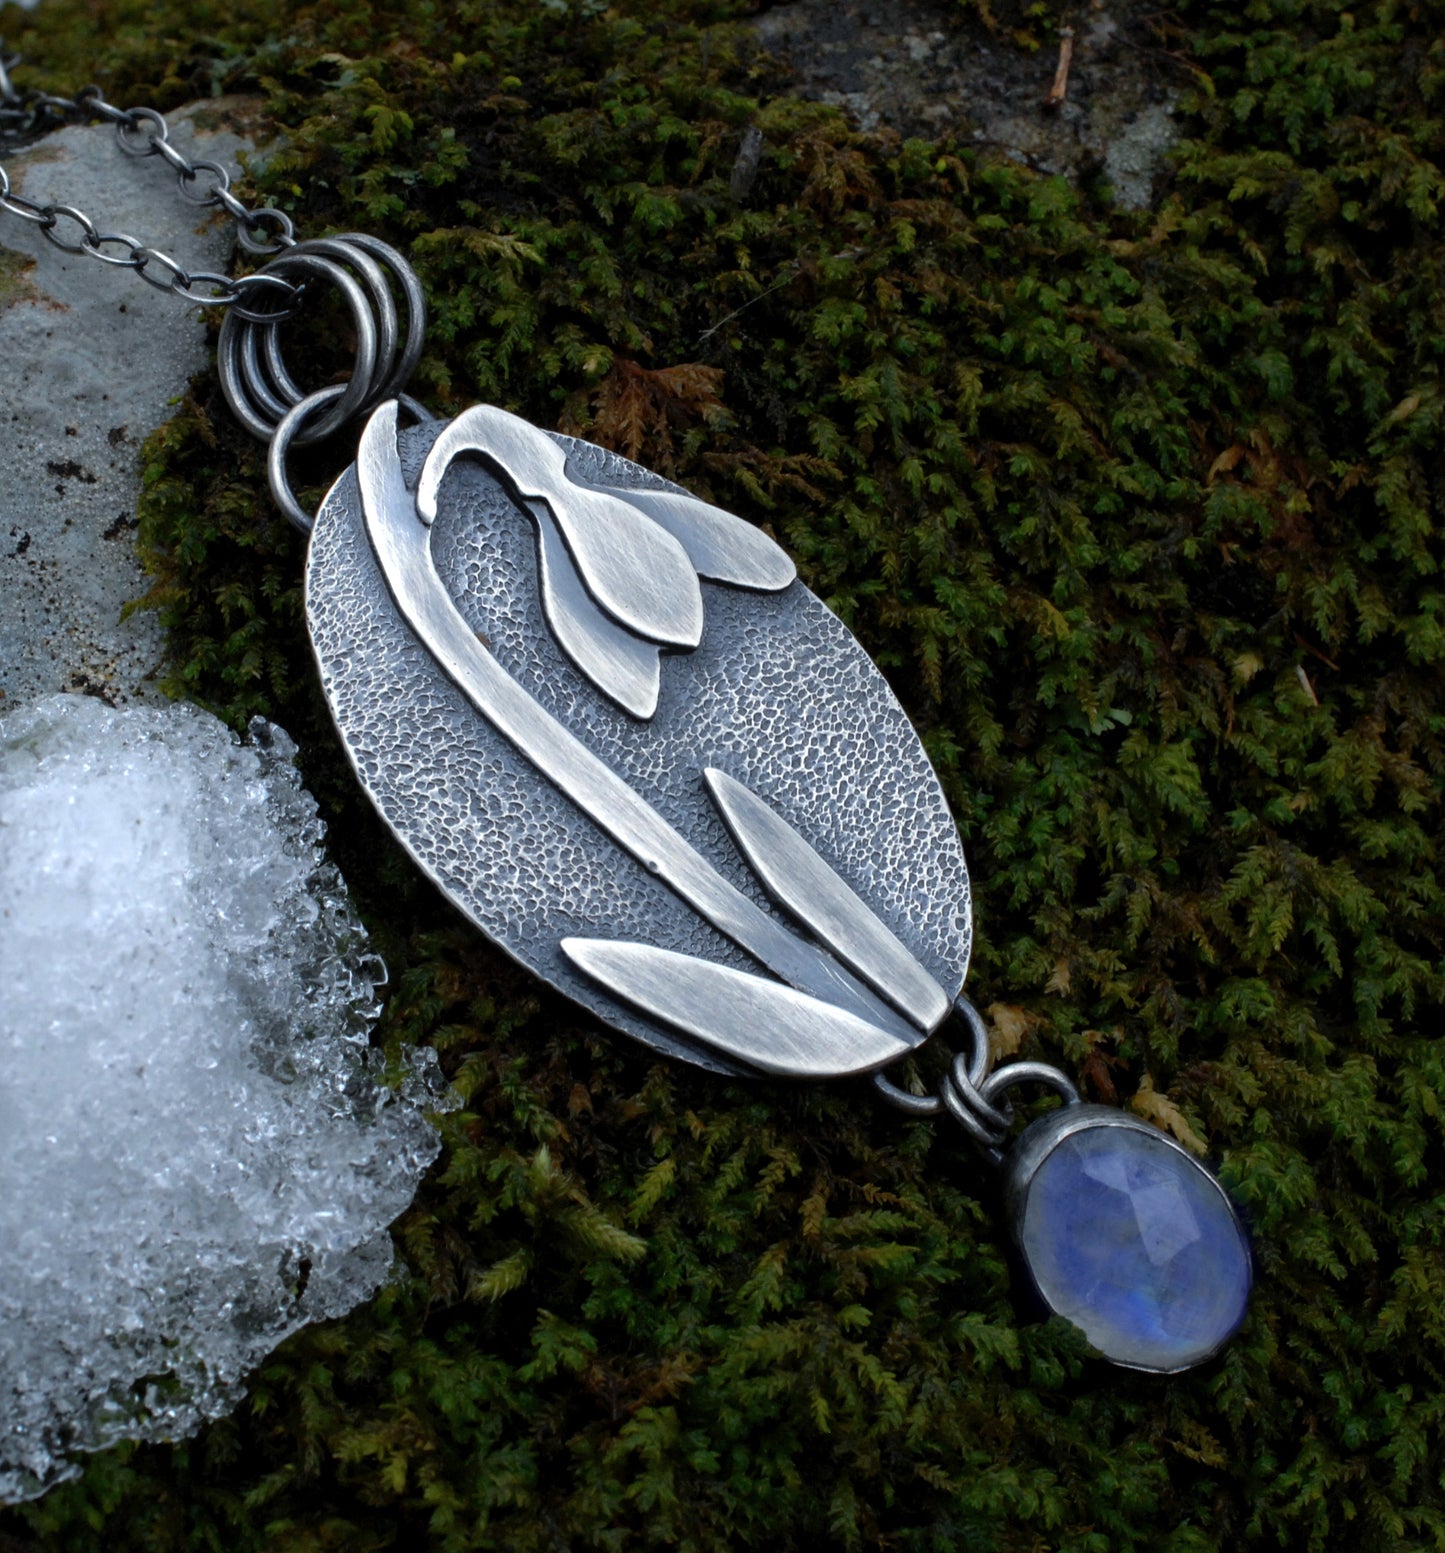 Rainbow Moonstone & Sterling Silver Floral Necklace | Snowdrop Flower & Gemstone Pendant